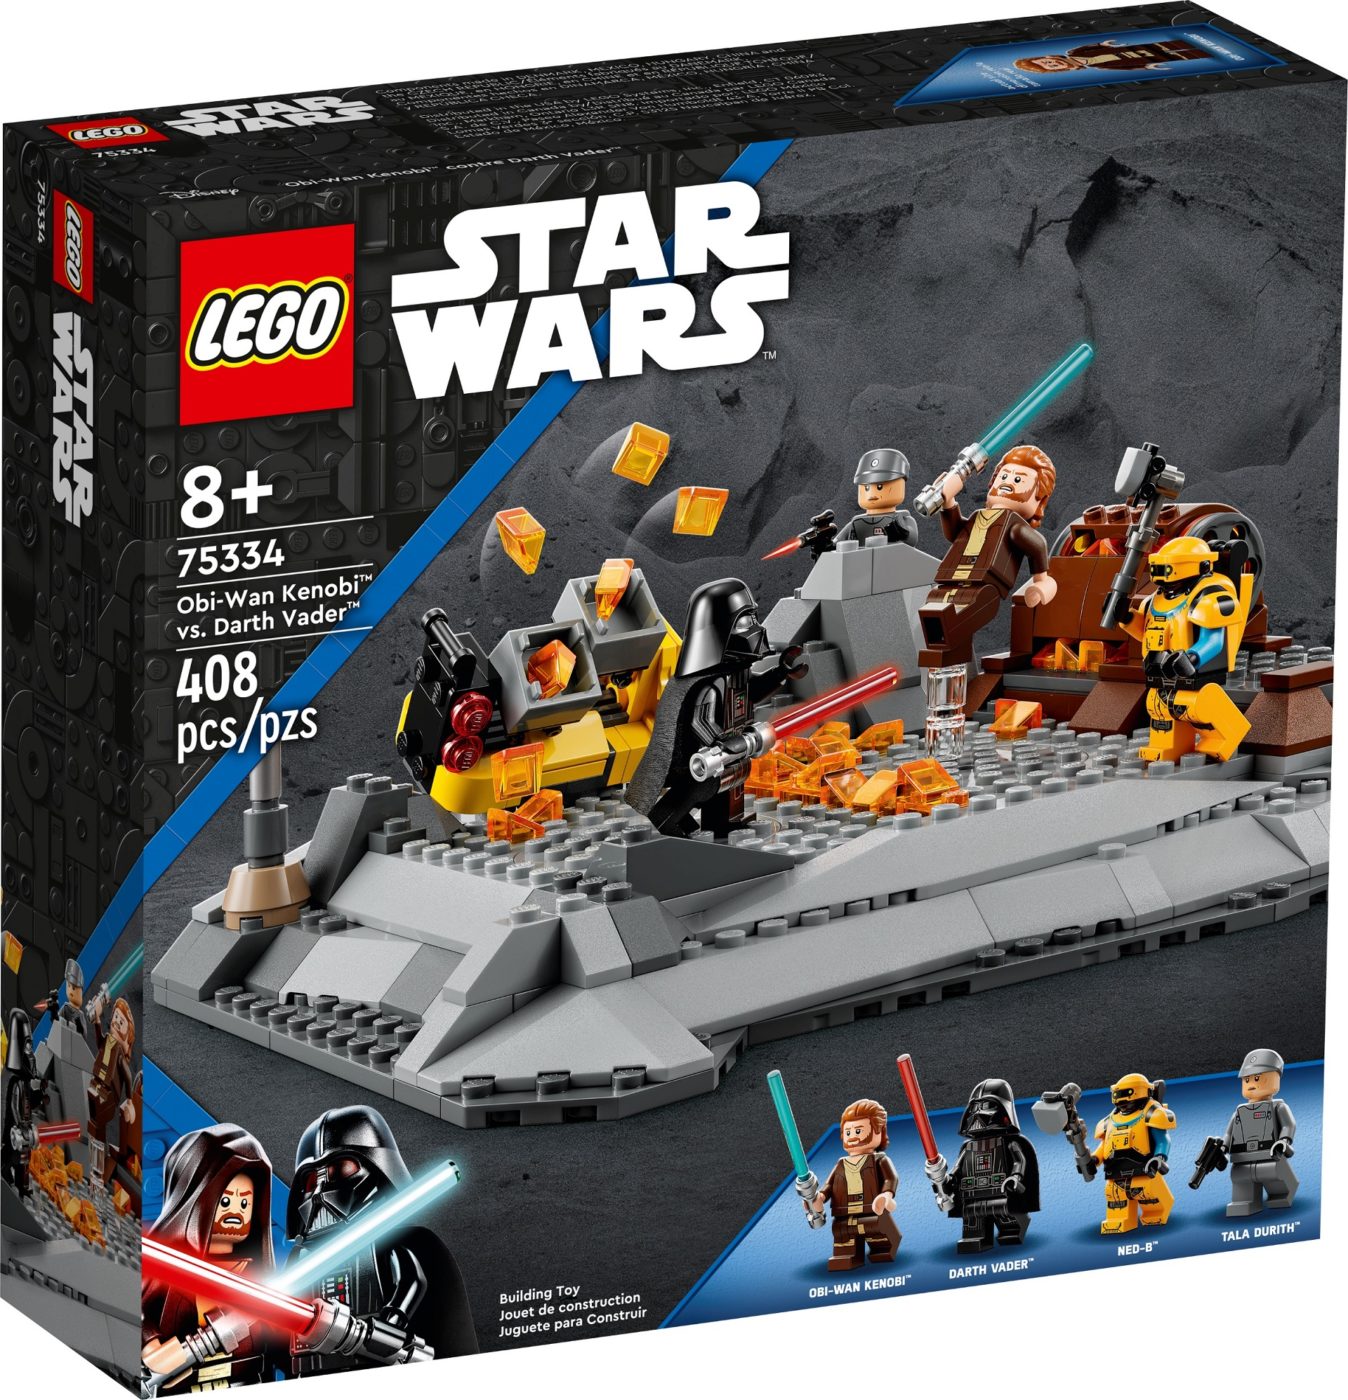 Tolkning shuffle Ride Review: LEGO 75334 Obi-Wan Kenobi vs. Darth Vader - Jay's Brick Blog